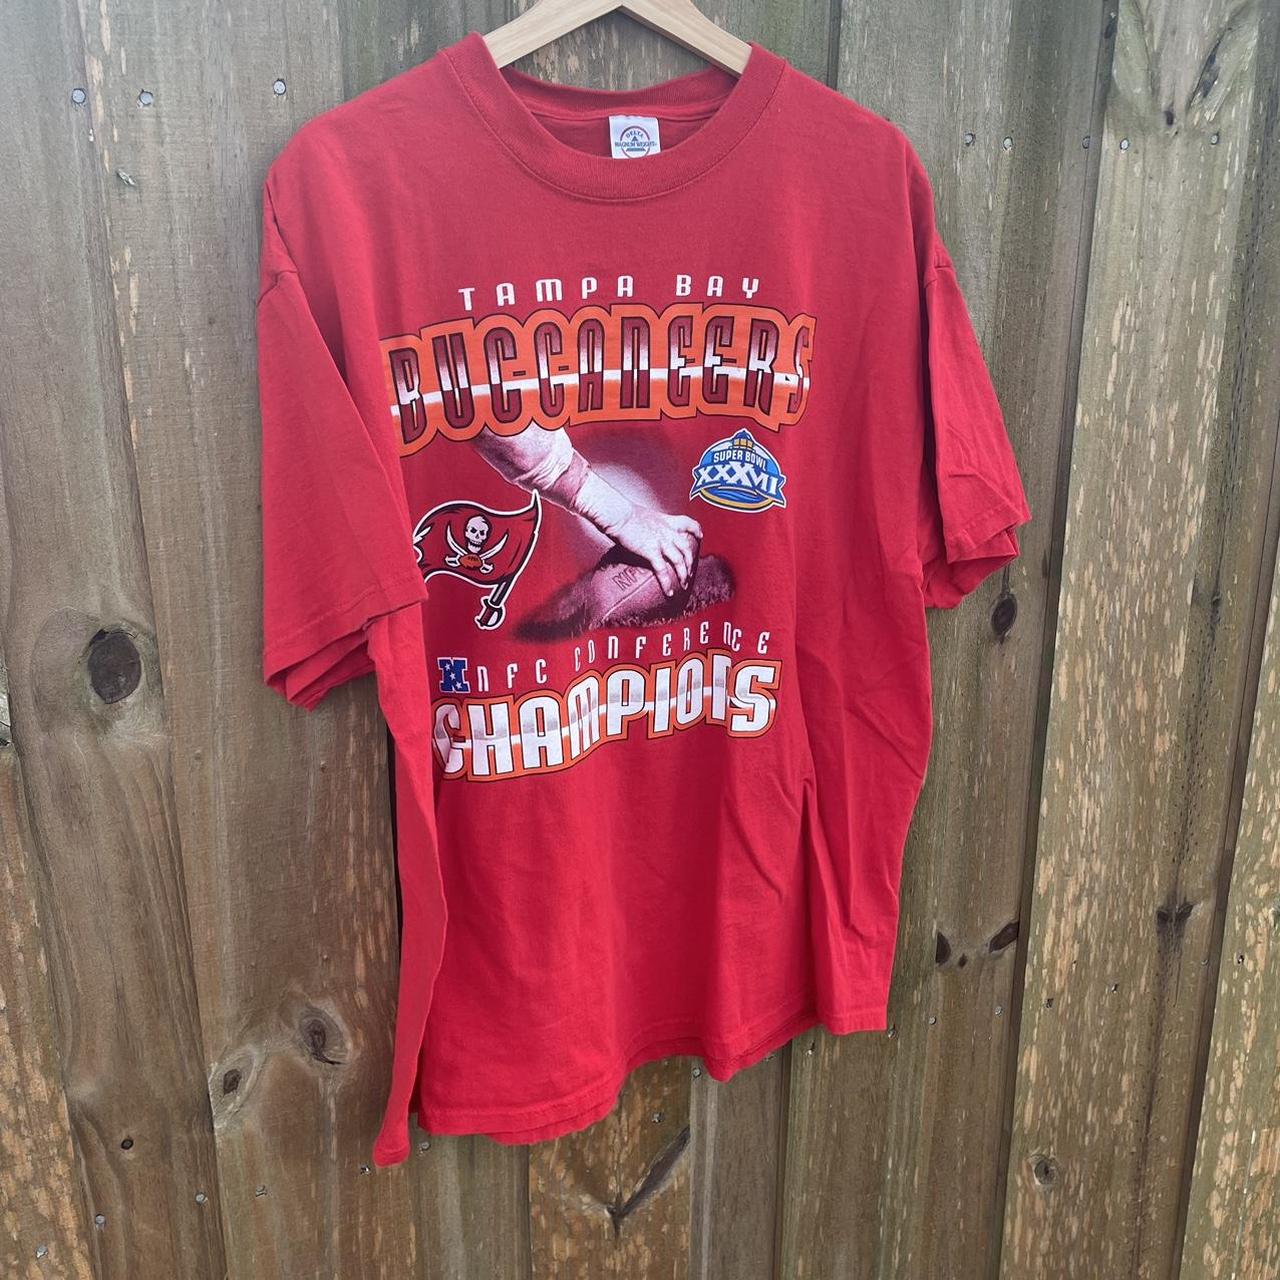 Vintage Tampa bay buccaneers t shirt size XL. Good... - Depop